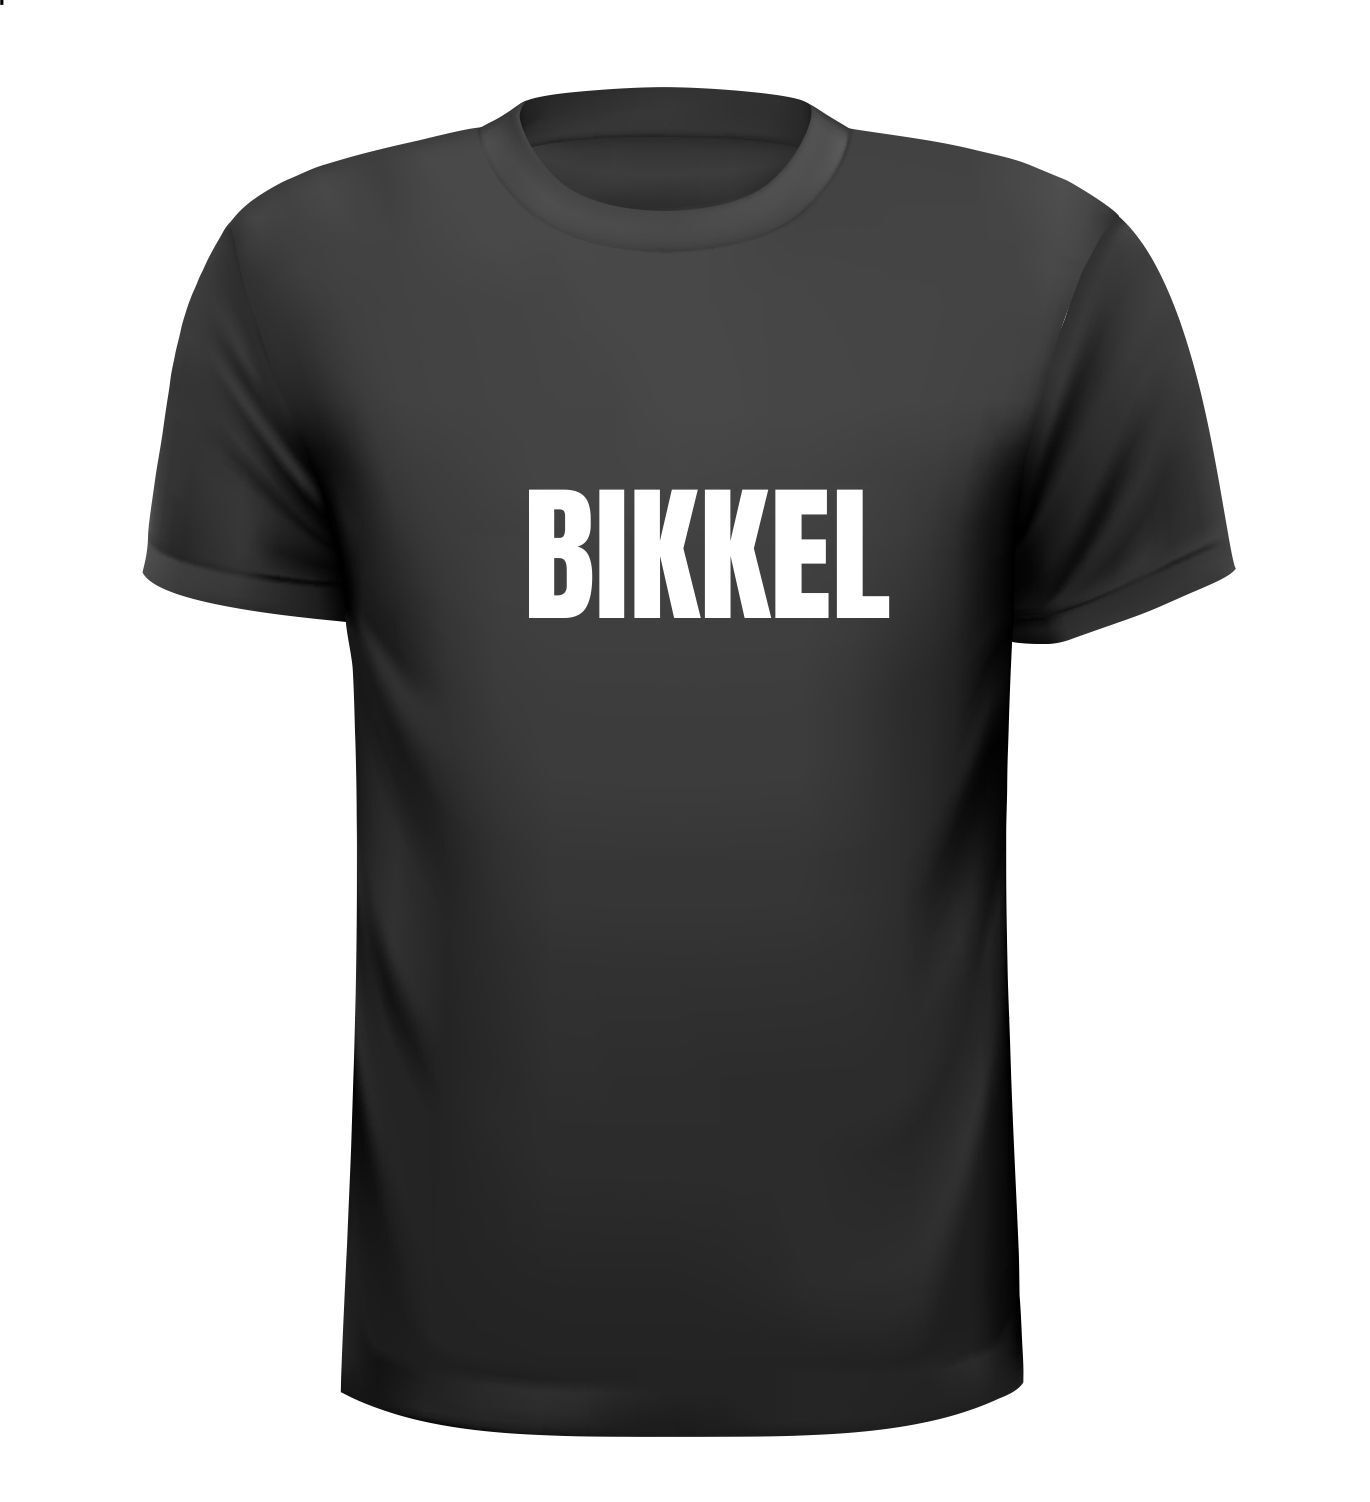 Bikkel T-shirt